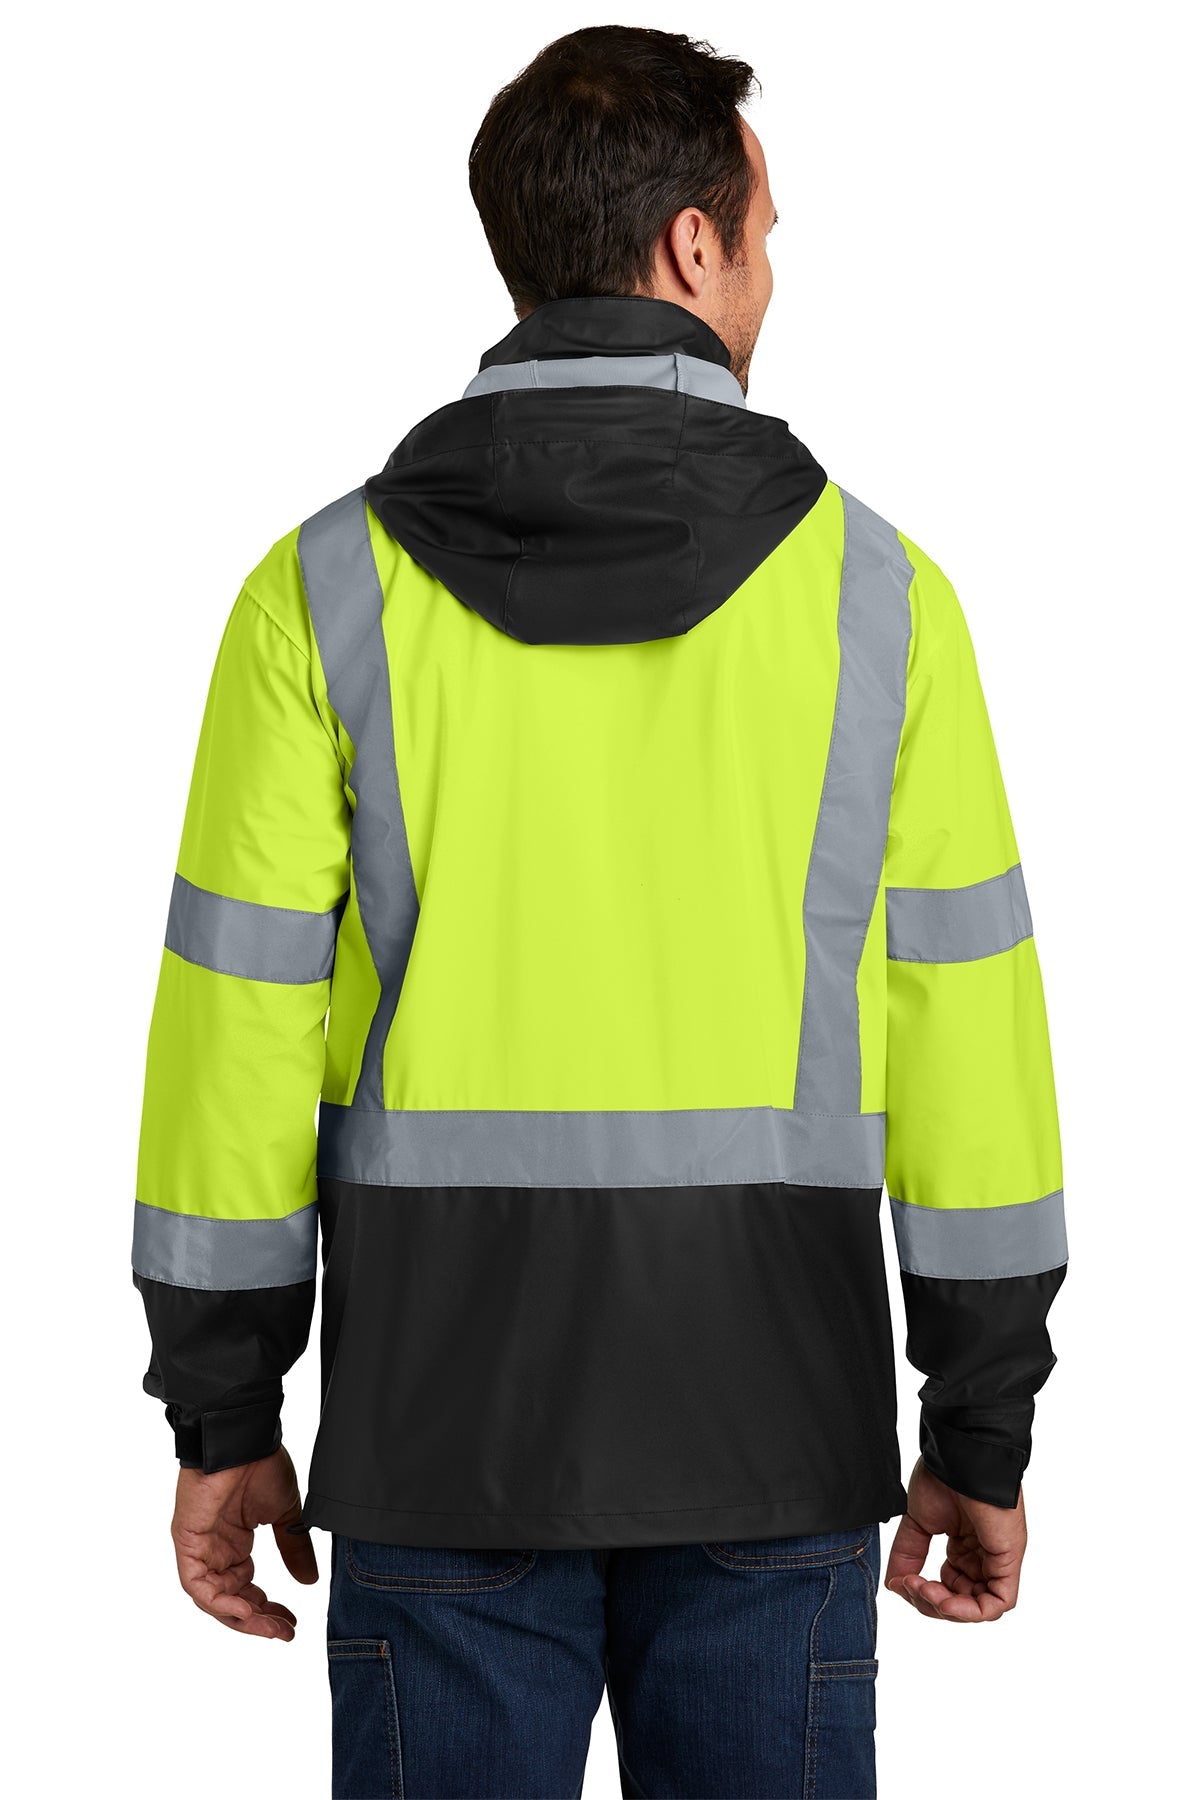 cornerstone_csj25 _safety yellow/black_company_logo_jackets